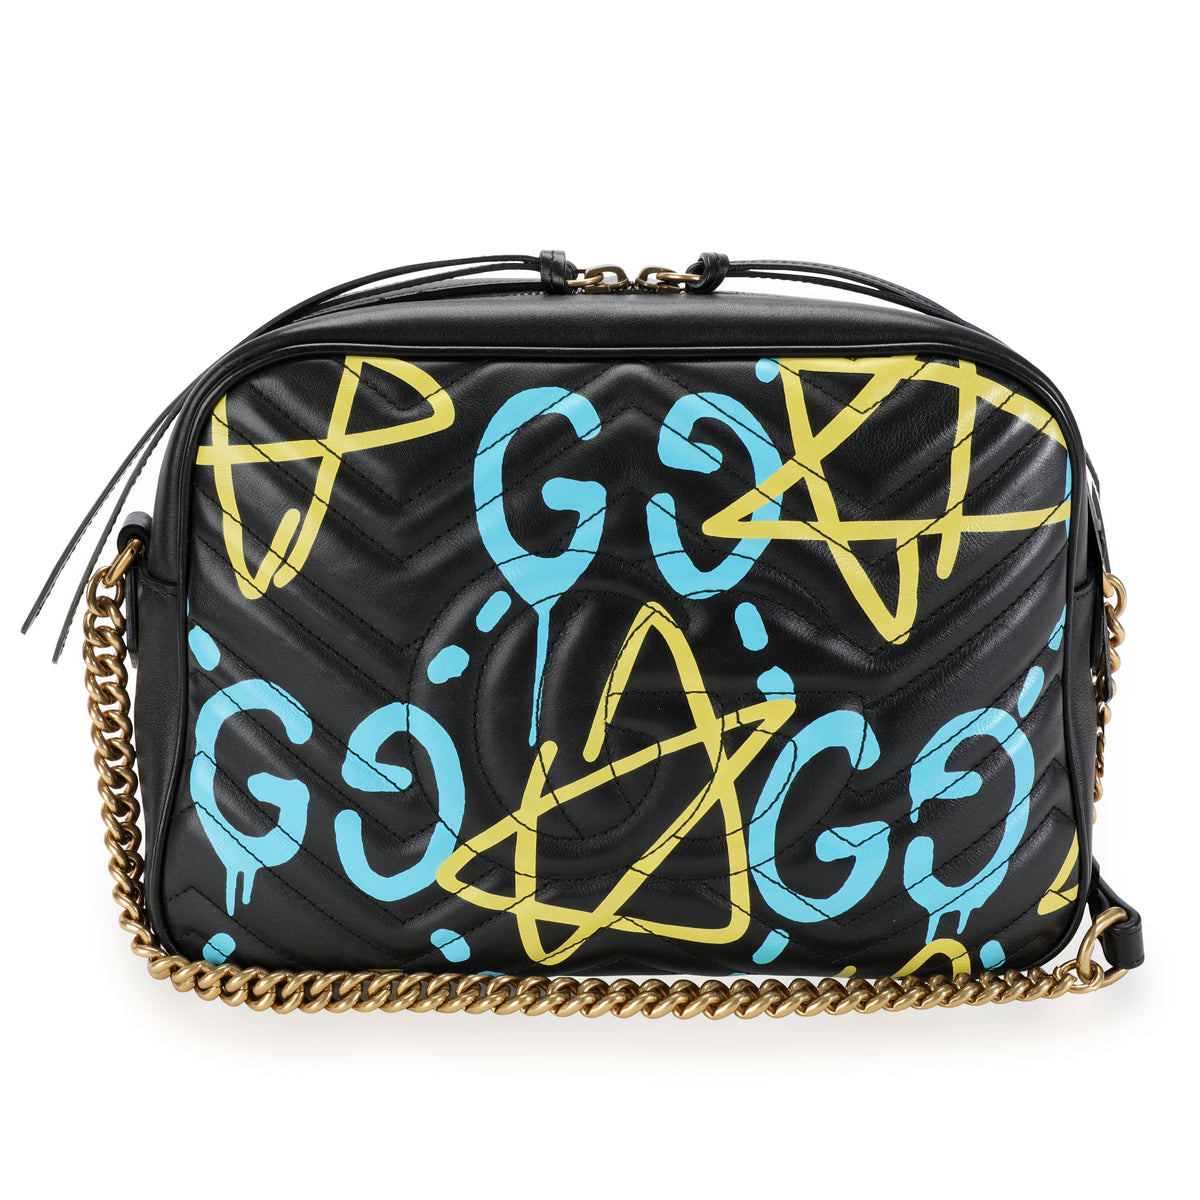 Gucci Ghost GG Marmont Medium Matelassé Leather Shoulder Bag